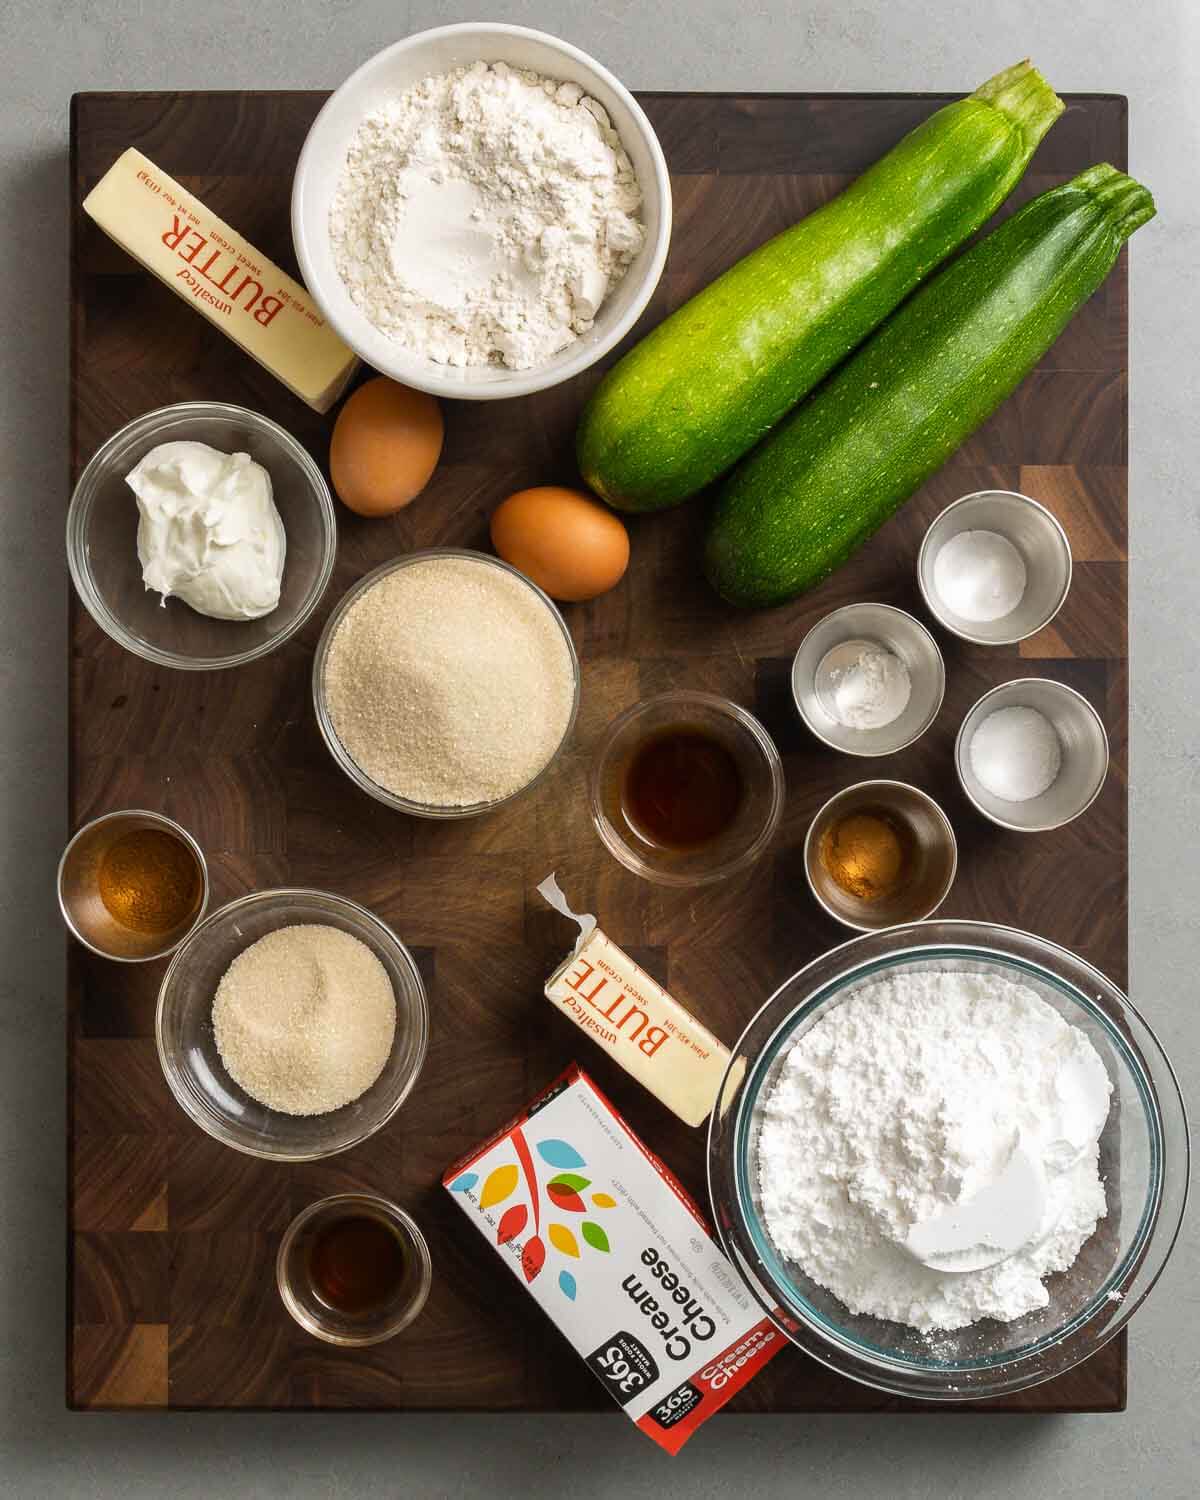 Ingredients shown: butter, flour, zucchini, eggs, Greek yogurt, sugar, baking soda, baking powder, salt, cinnamon, and vanilla.